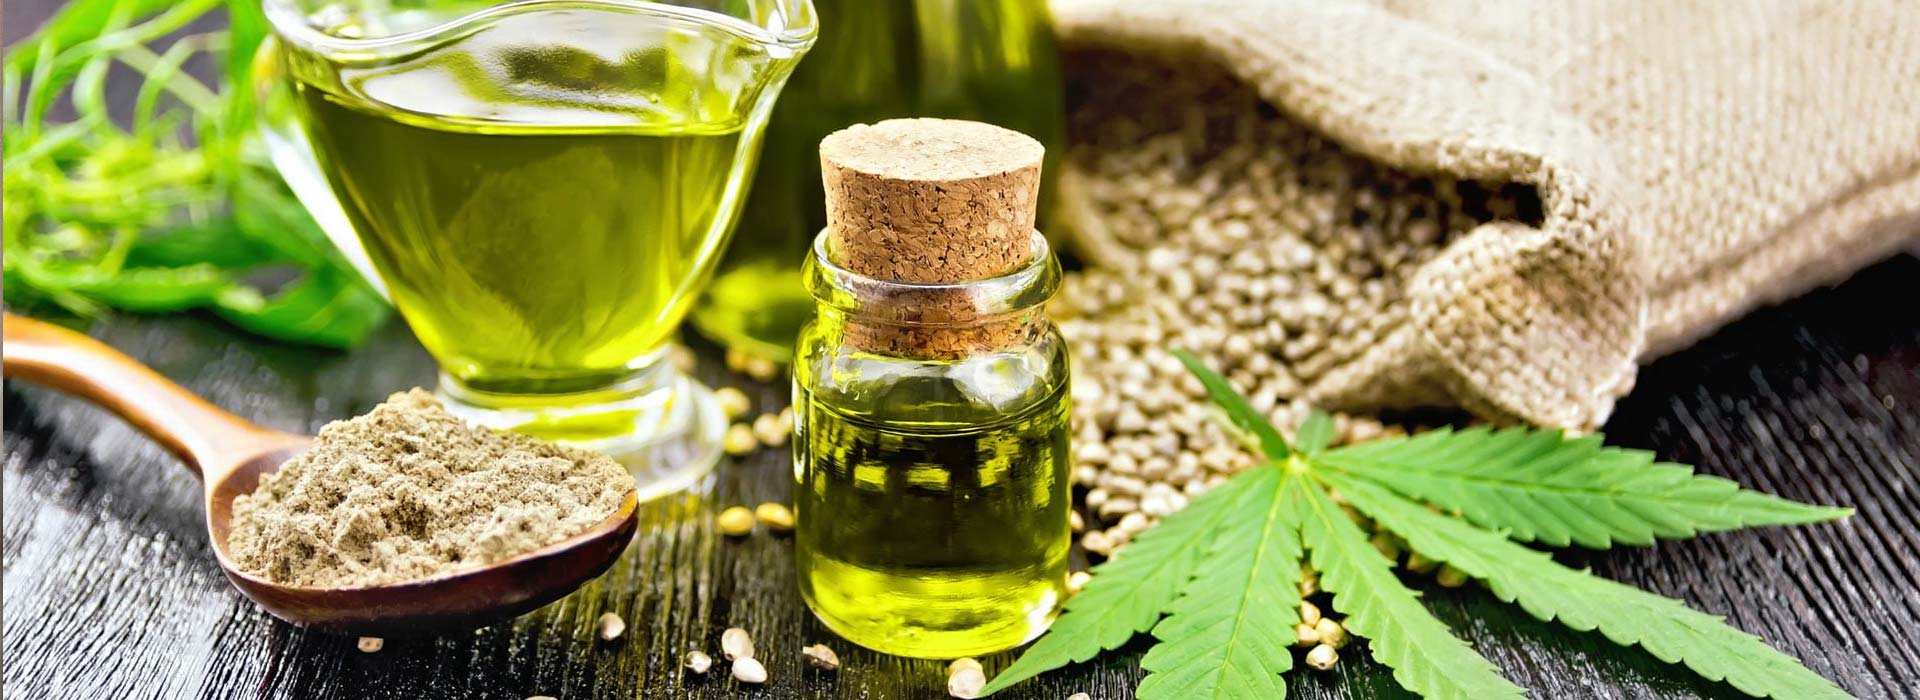 CBD Oil Vial with raw Hemp Seeds and Marijuana Leafs